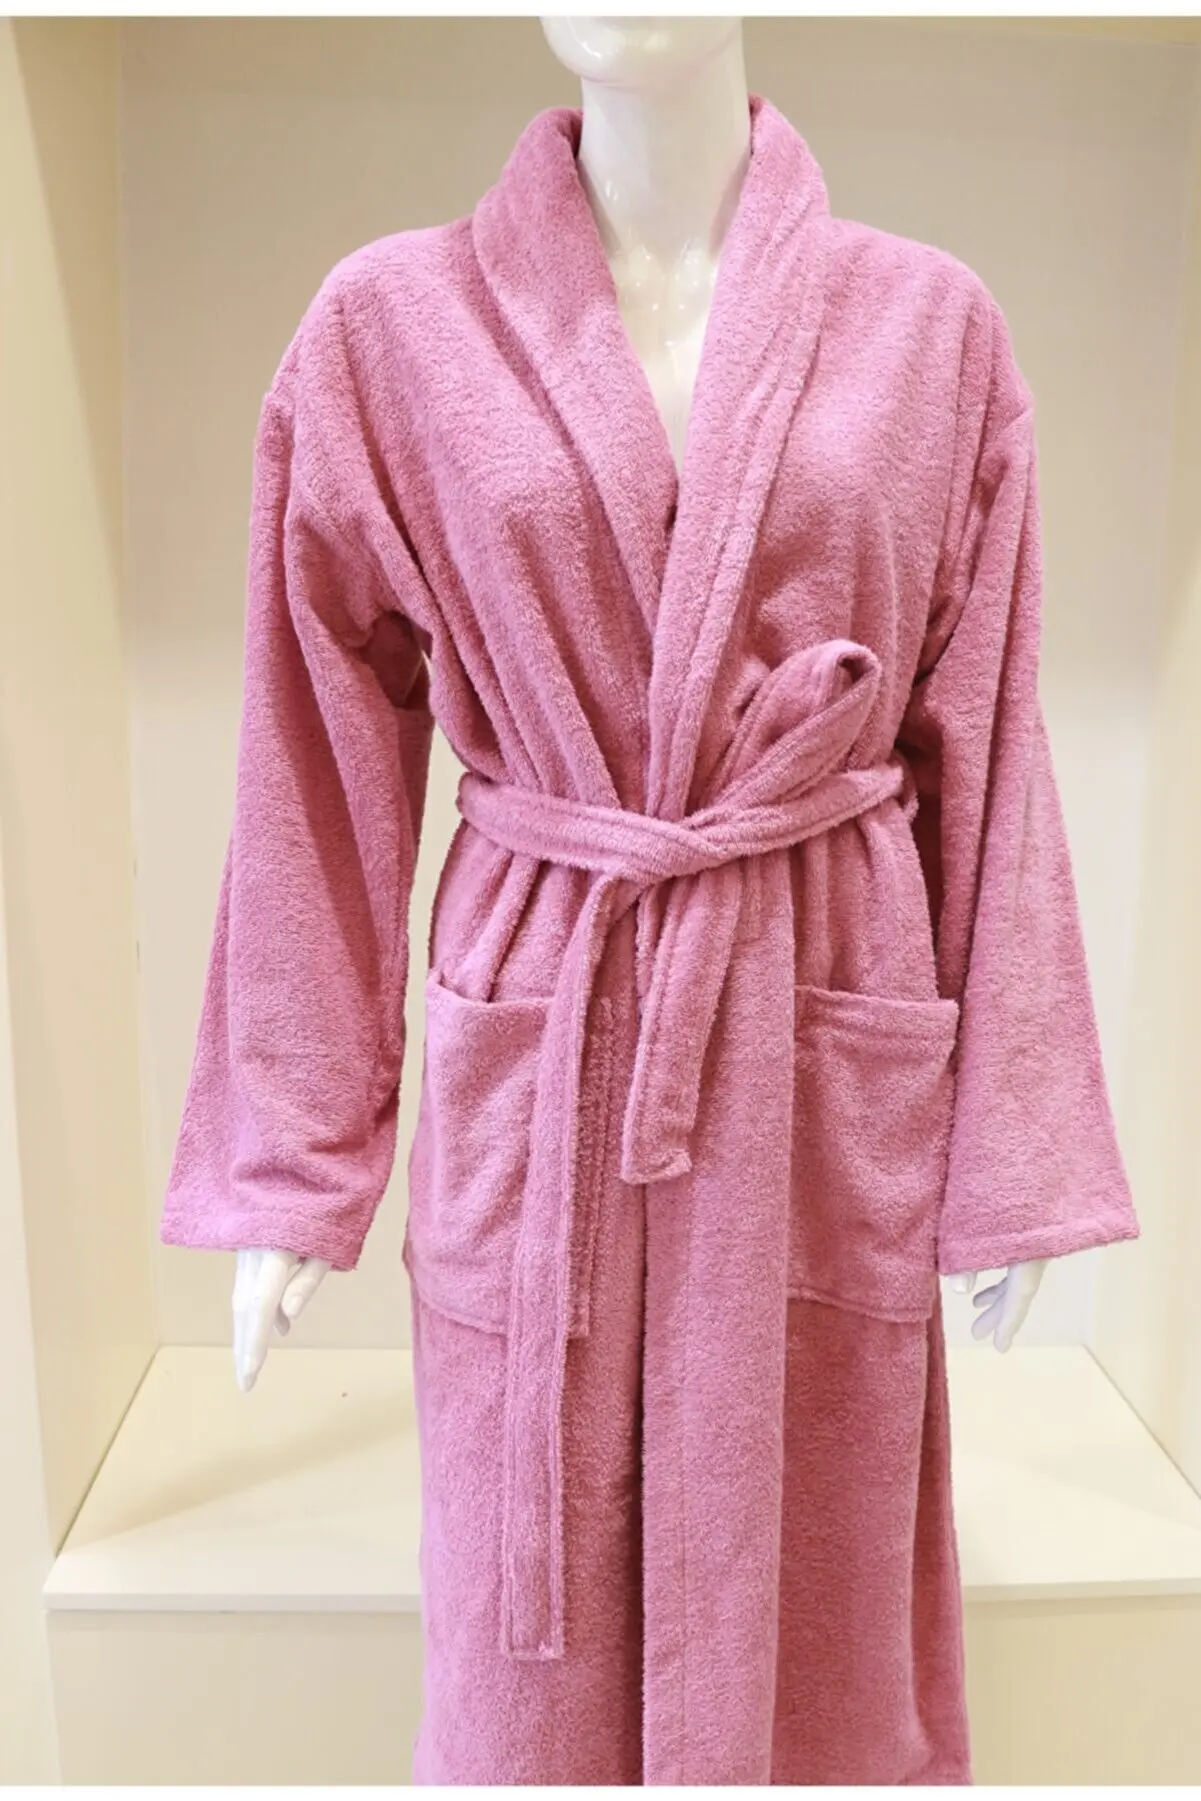 Unisex bathrobe towel colorful pink green blue purple bath robe pocketed bathrobe women bath robe men bathrobe new season